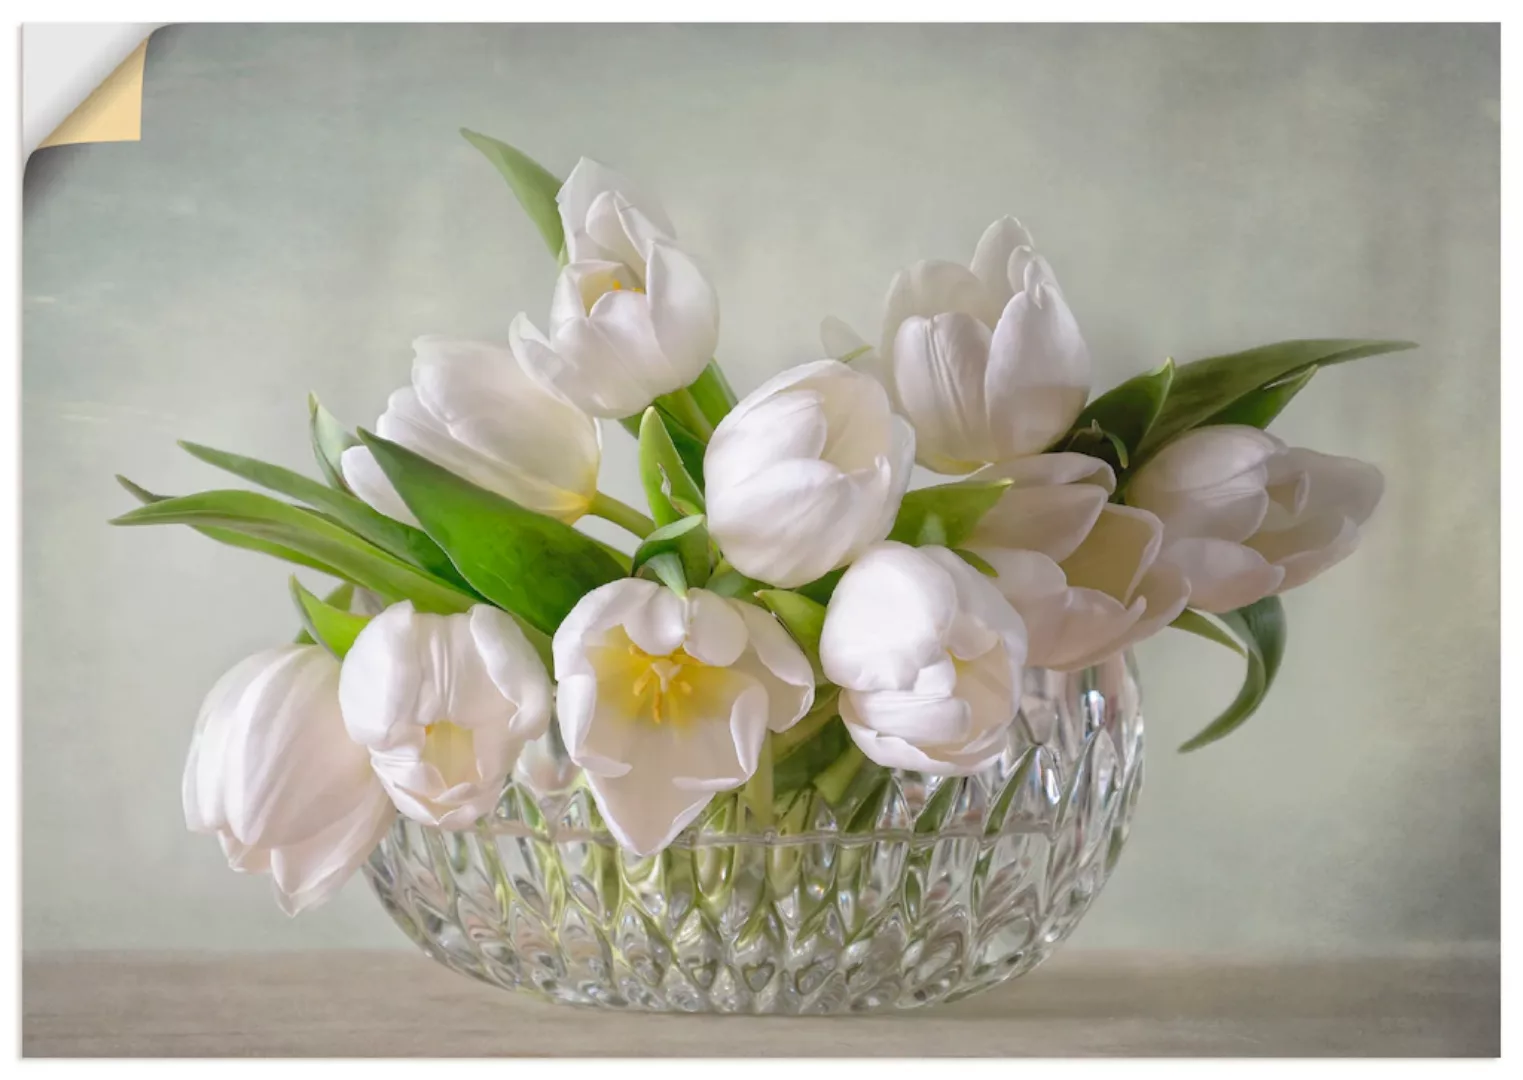 Artland Wandbild »Weiße Tulpen«, Blumen, (1 St.), als Leinwandbild, Poster, günstig online kaufen